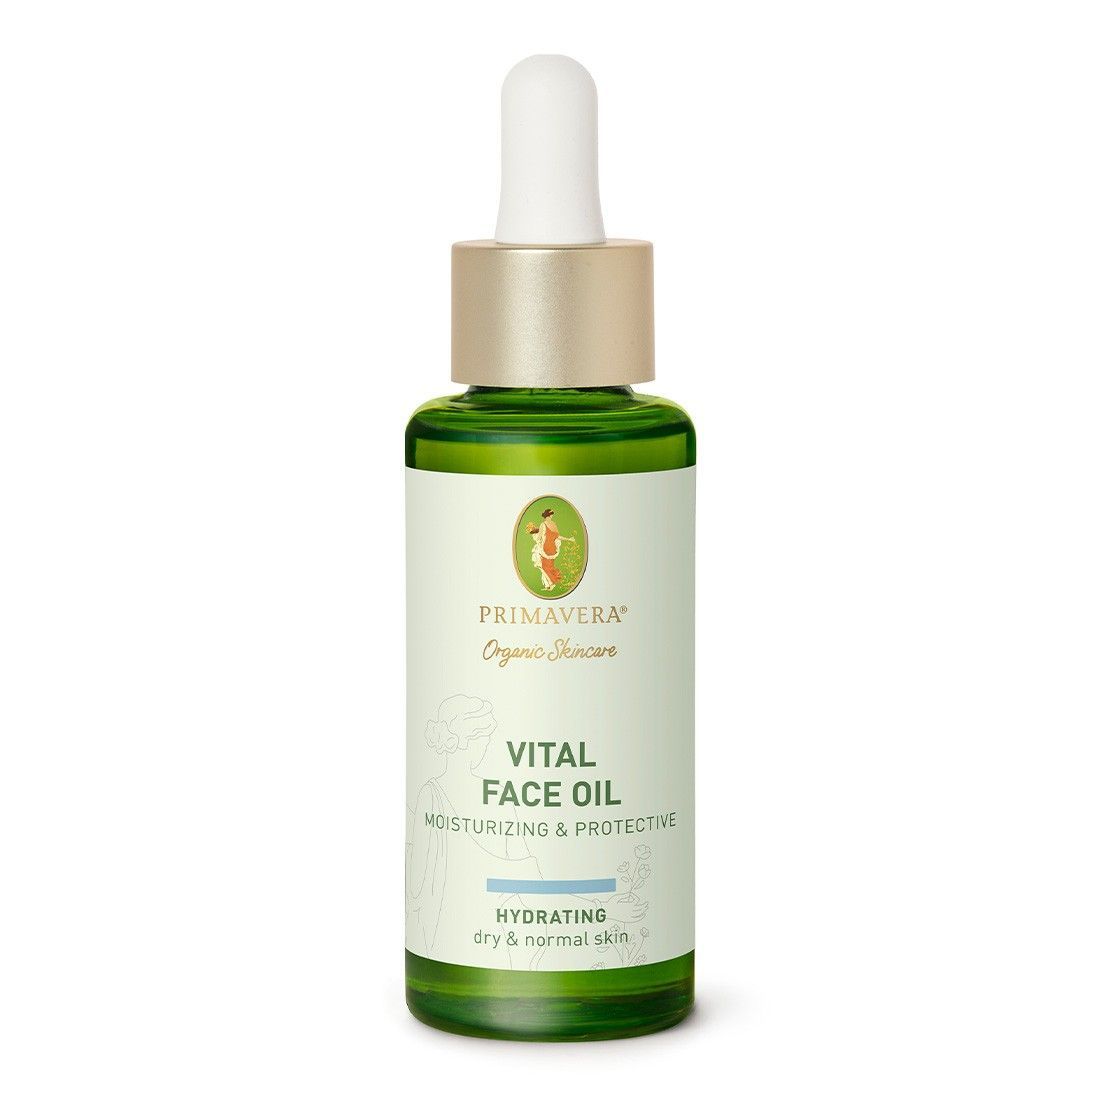 Primavera Organic Skincare Vital Face Oil Moisturizing & Protective Hydrating